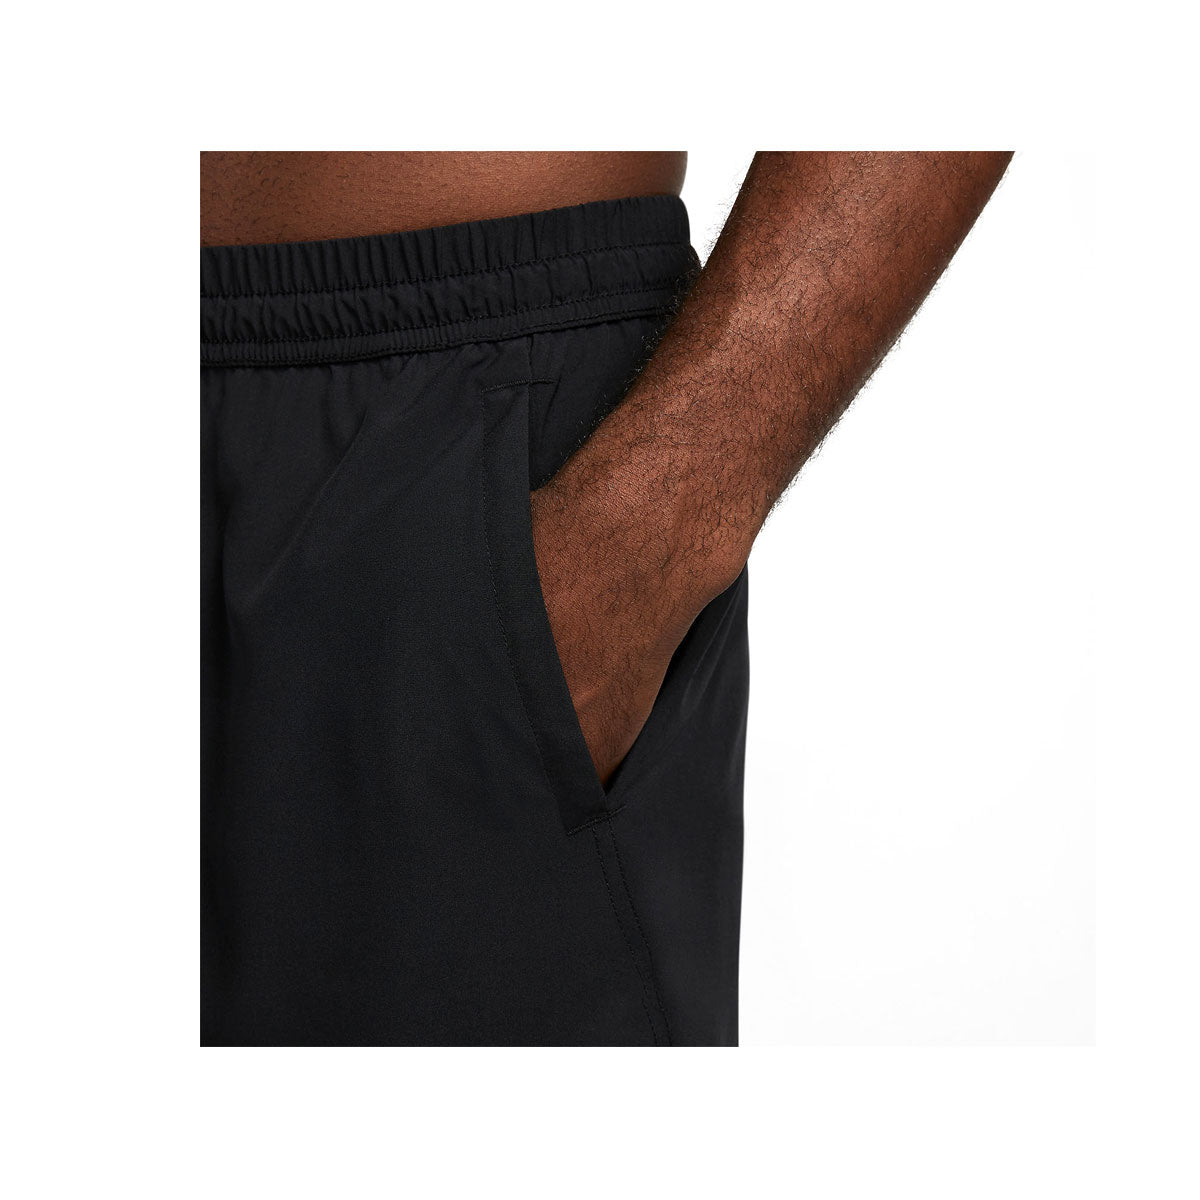 Nike Men's Dri-FIT Knit 7in Training Shorts